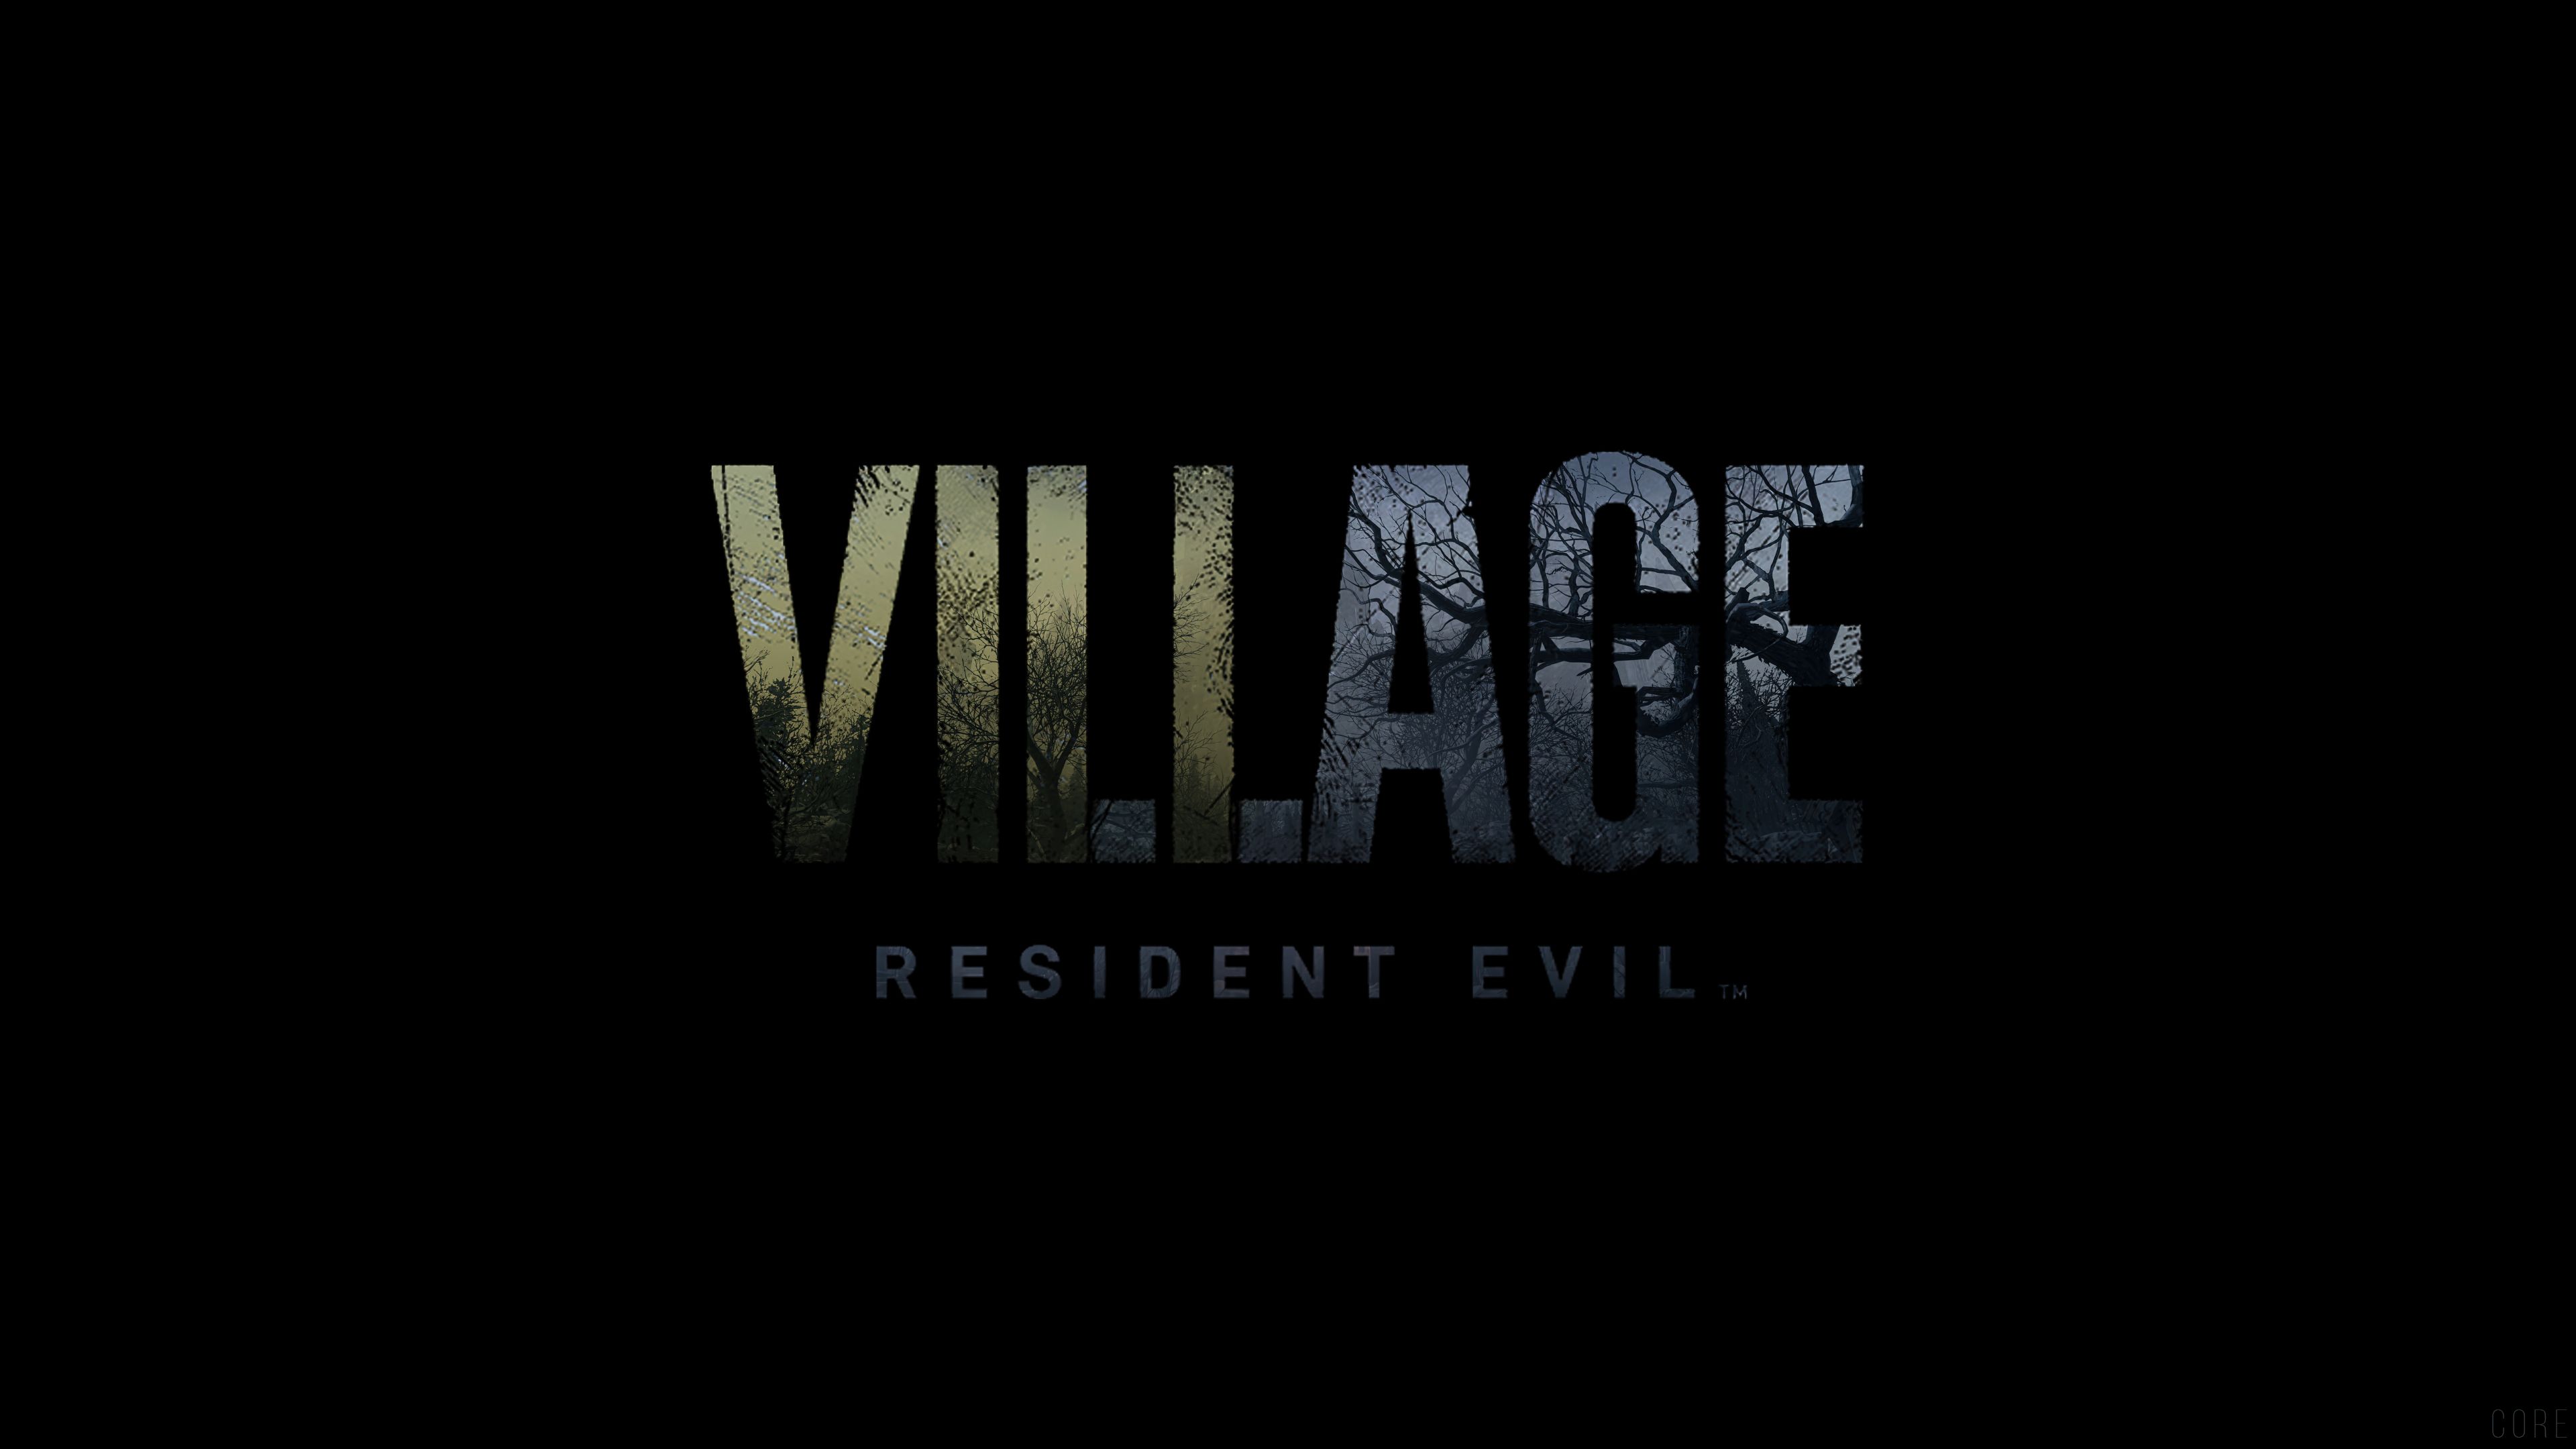 Wallpaper, Resident Evil, resident evil village, Resident Evil 8 Village, logo, video games, minimalism, text, texture 3840x2160